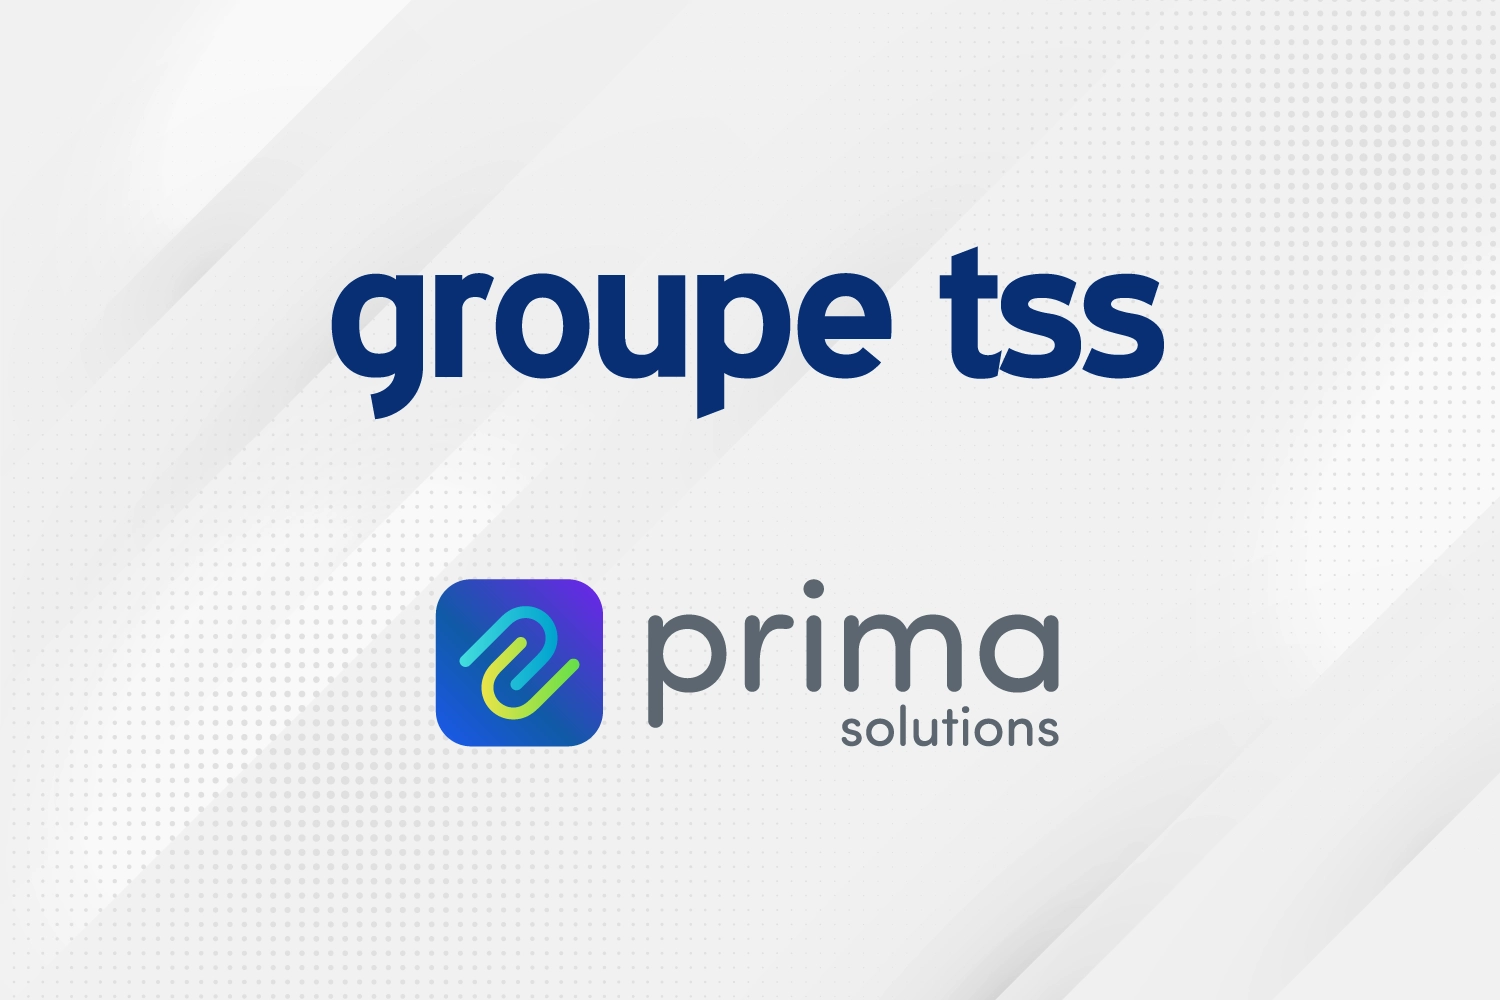 TSS Prima Solutions